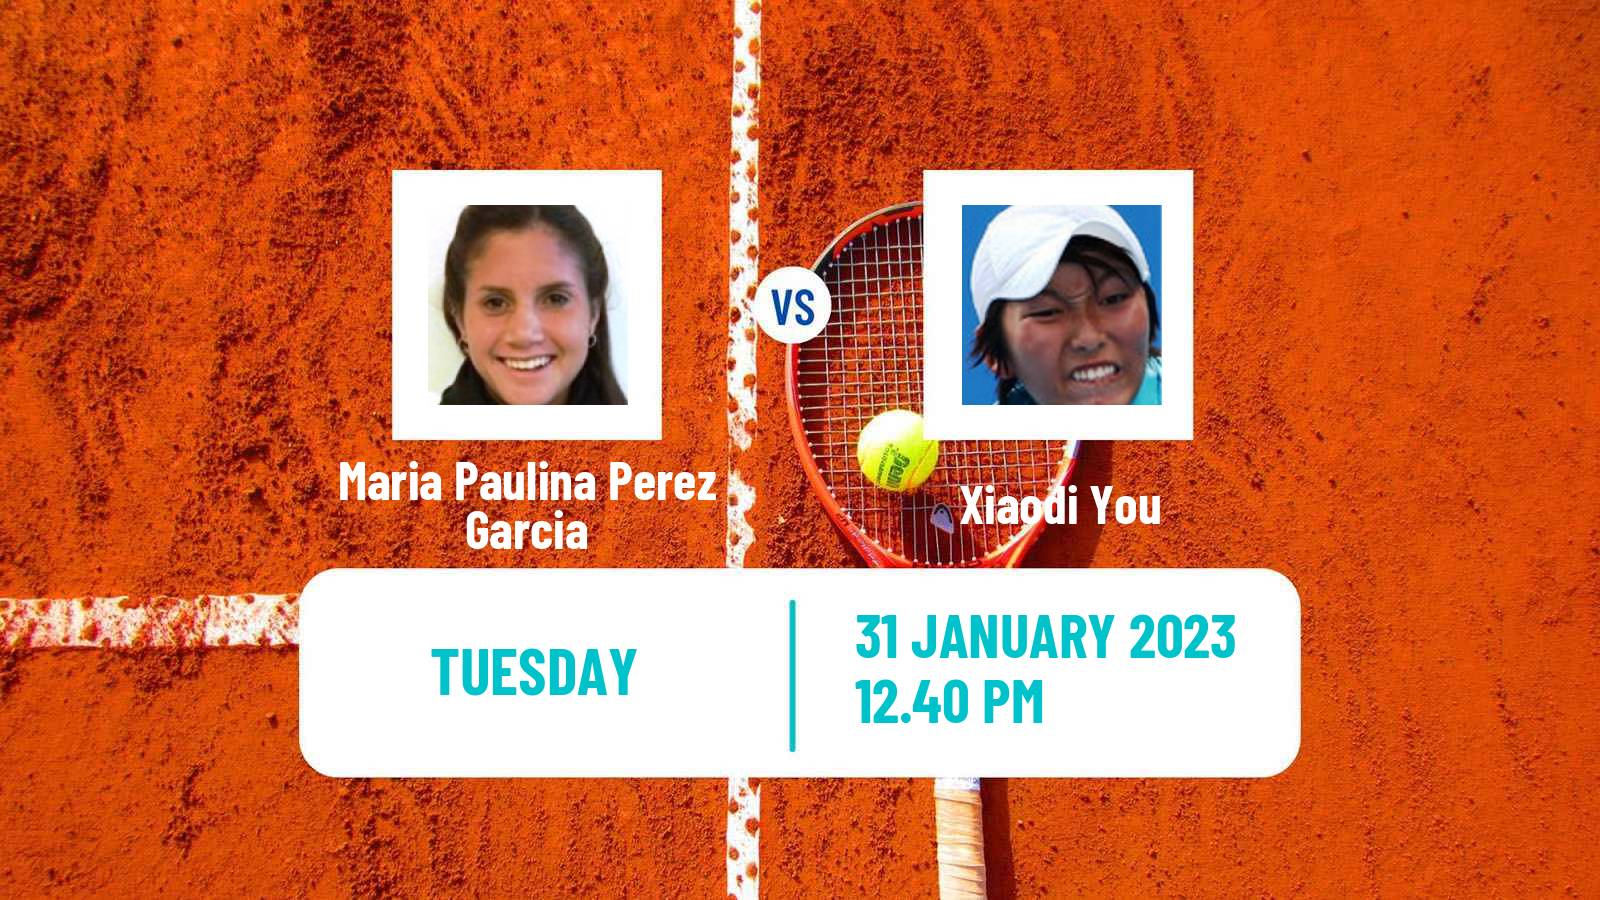 Tennis ATP Challenger Maria Paulina Perez Garcia - Xiaodi You